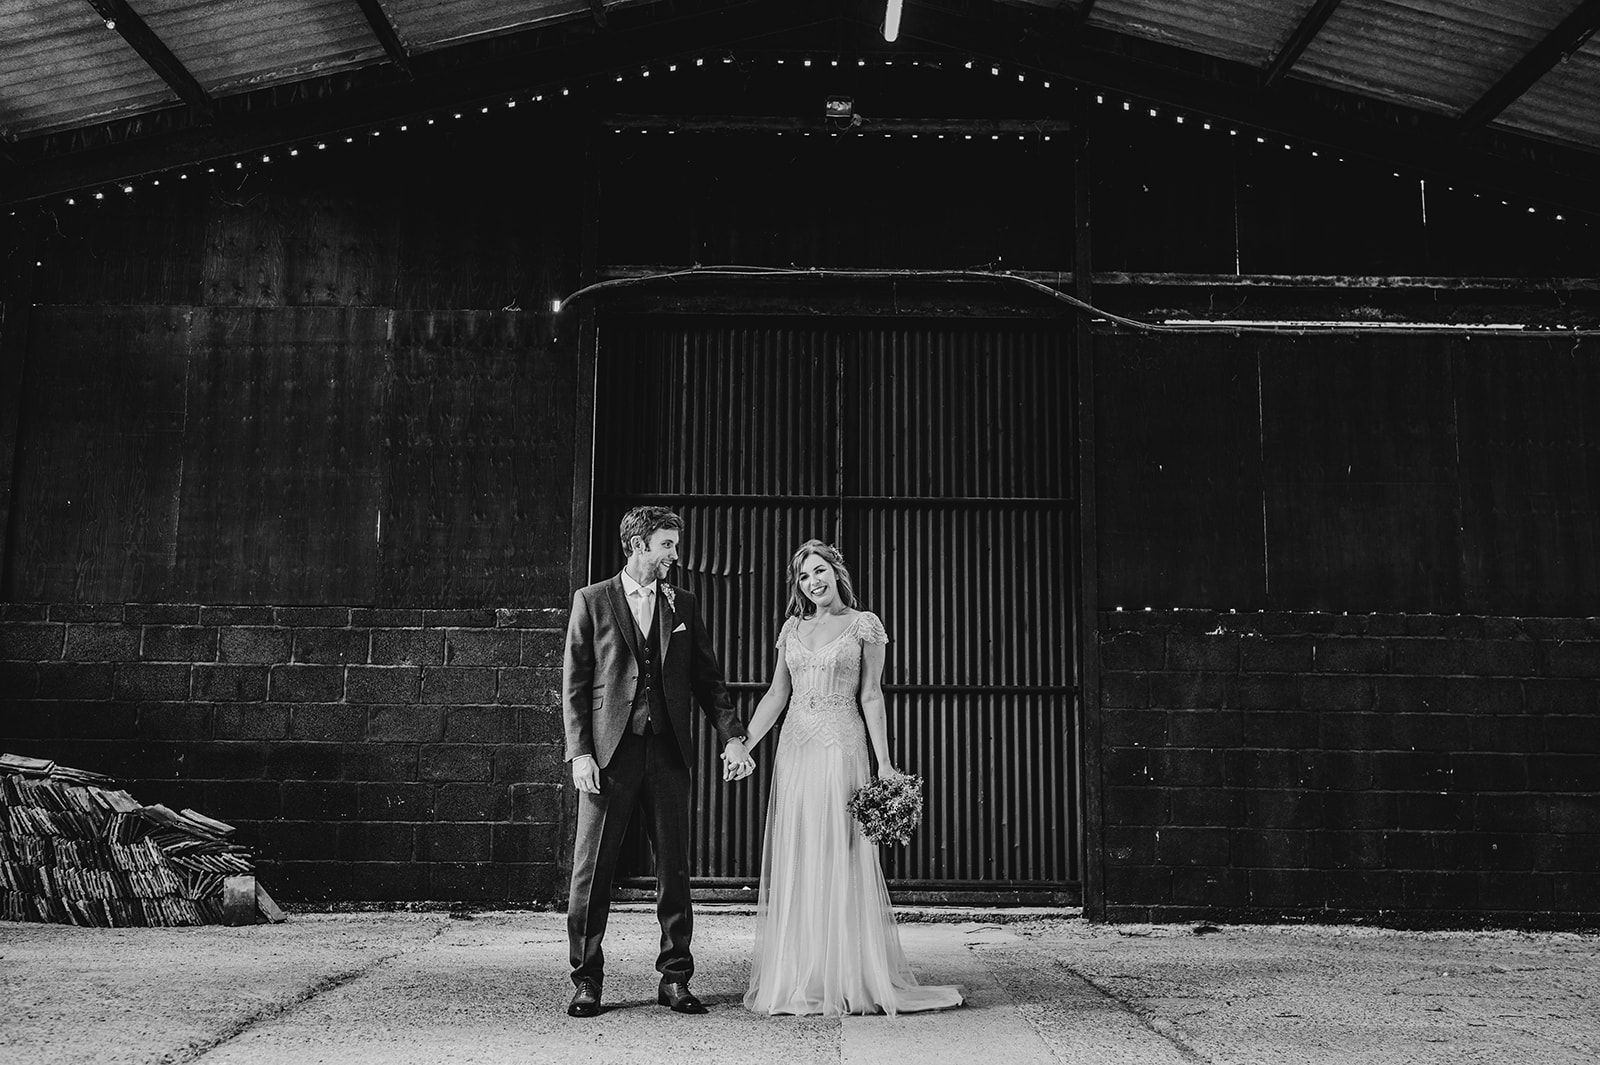 Wedding couple portrait in barn